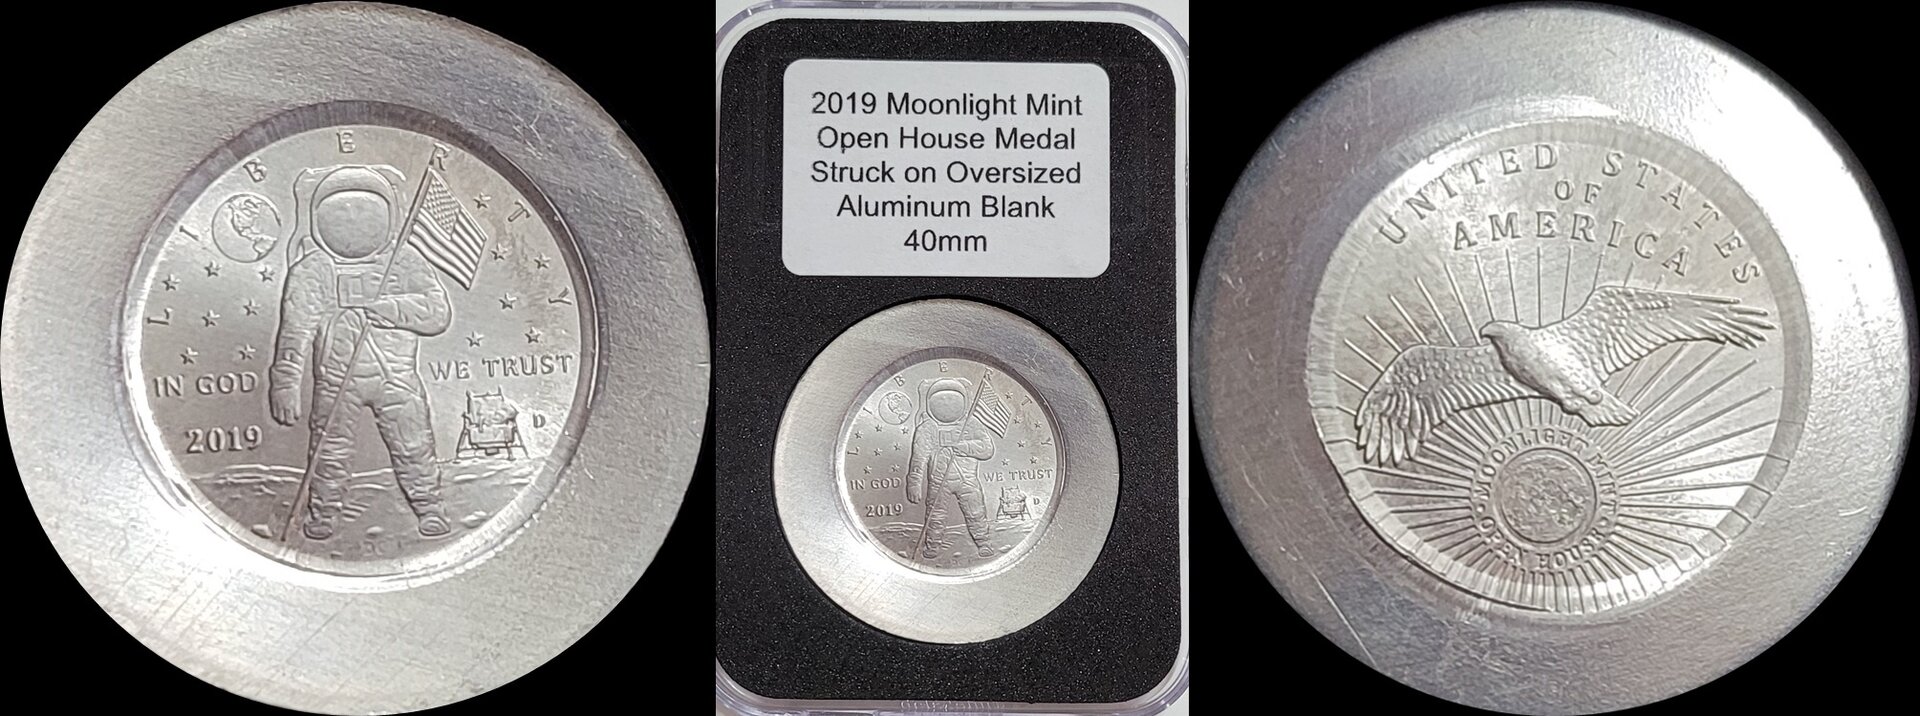 2019 Moonlight Mint Open House Medal Struck on Oversized Aluminum Blank 40mm Aa1-horz.jpg